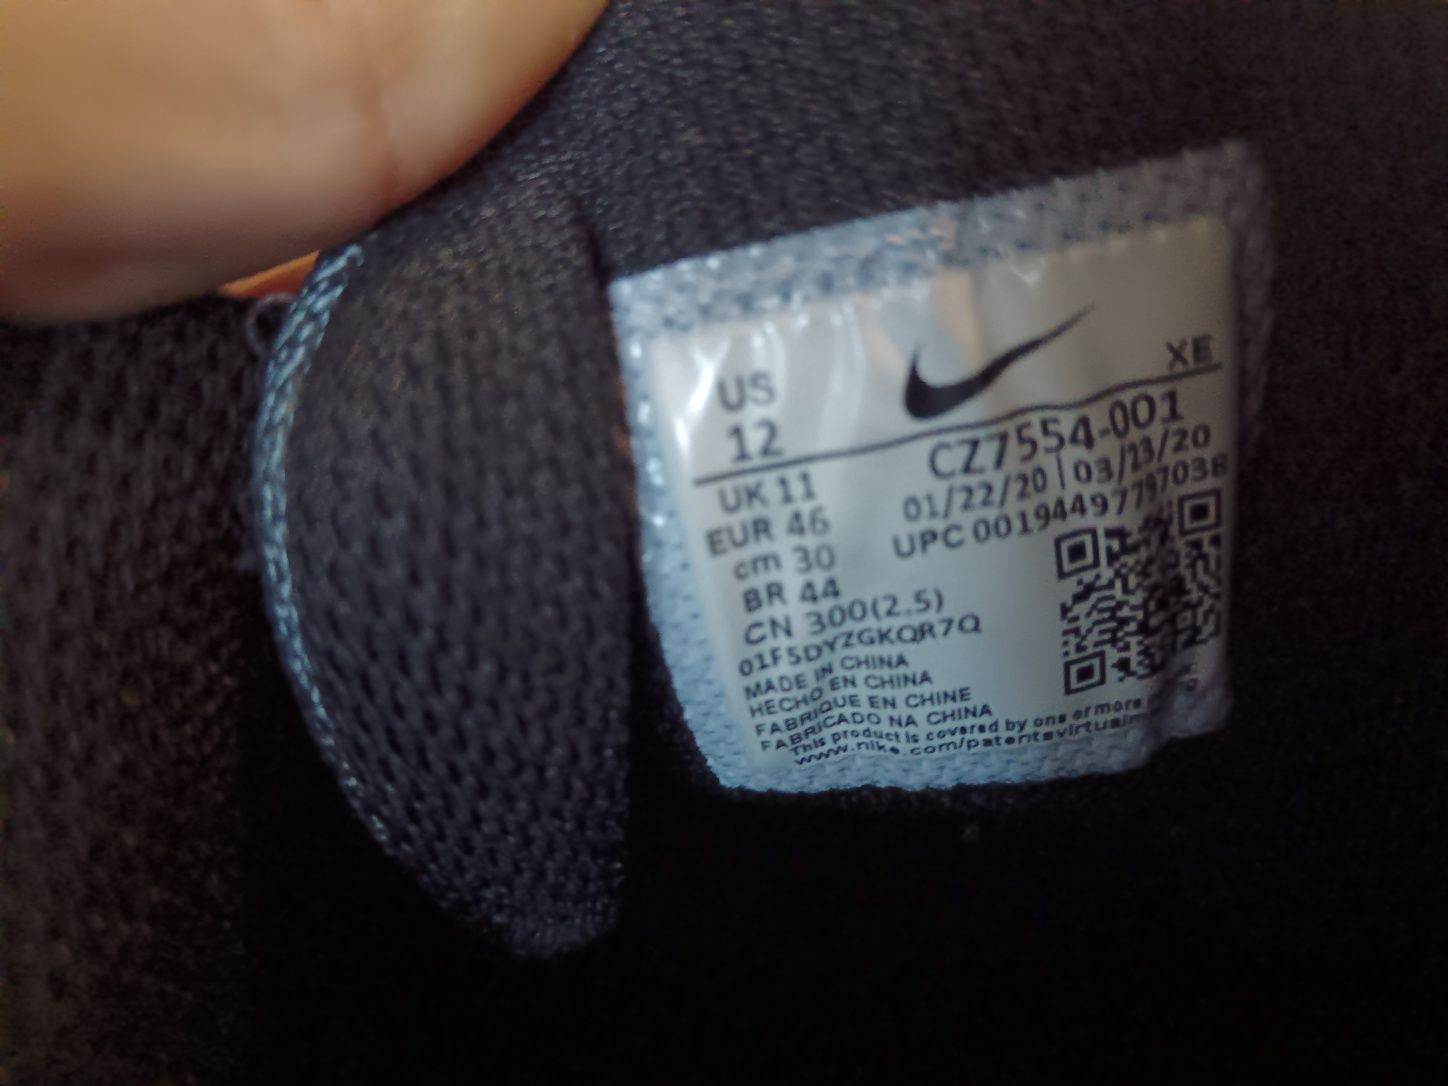 vând papuci Nike Air max putin folositi